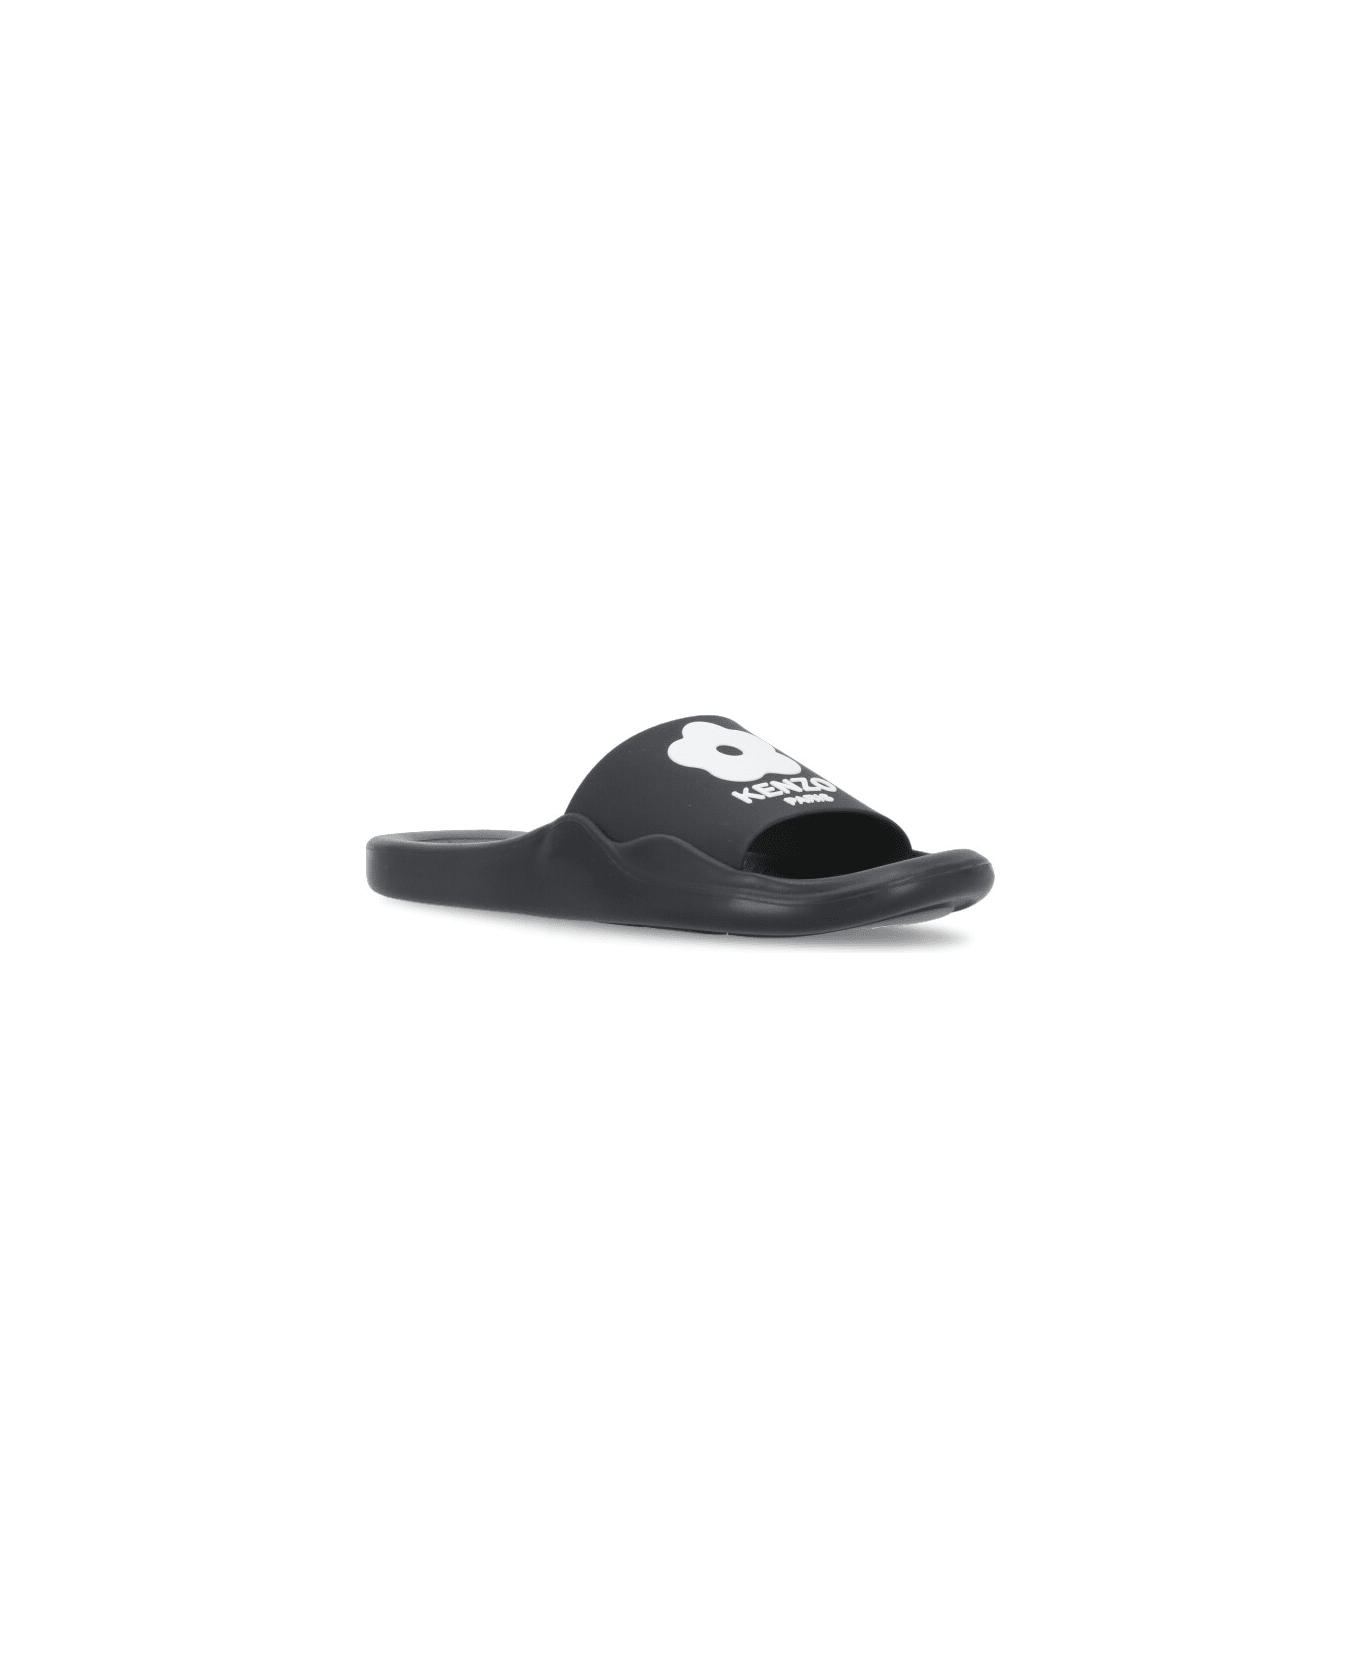 Kenzo Pool Slippers - Black